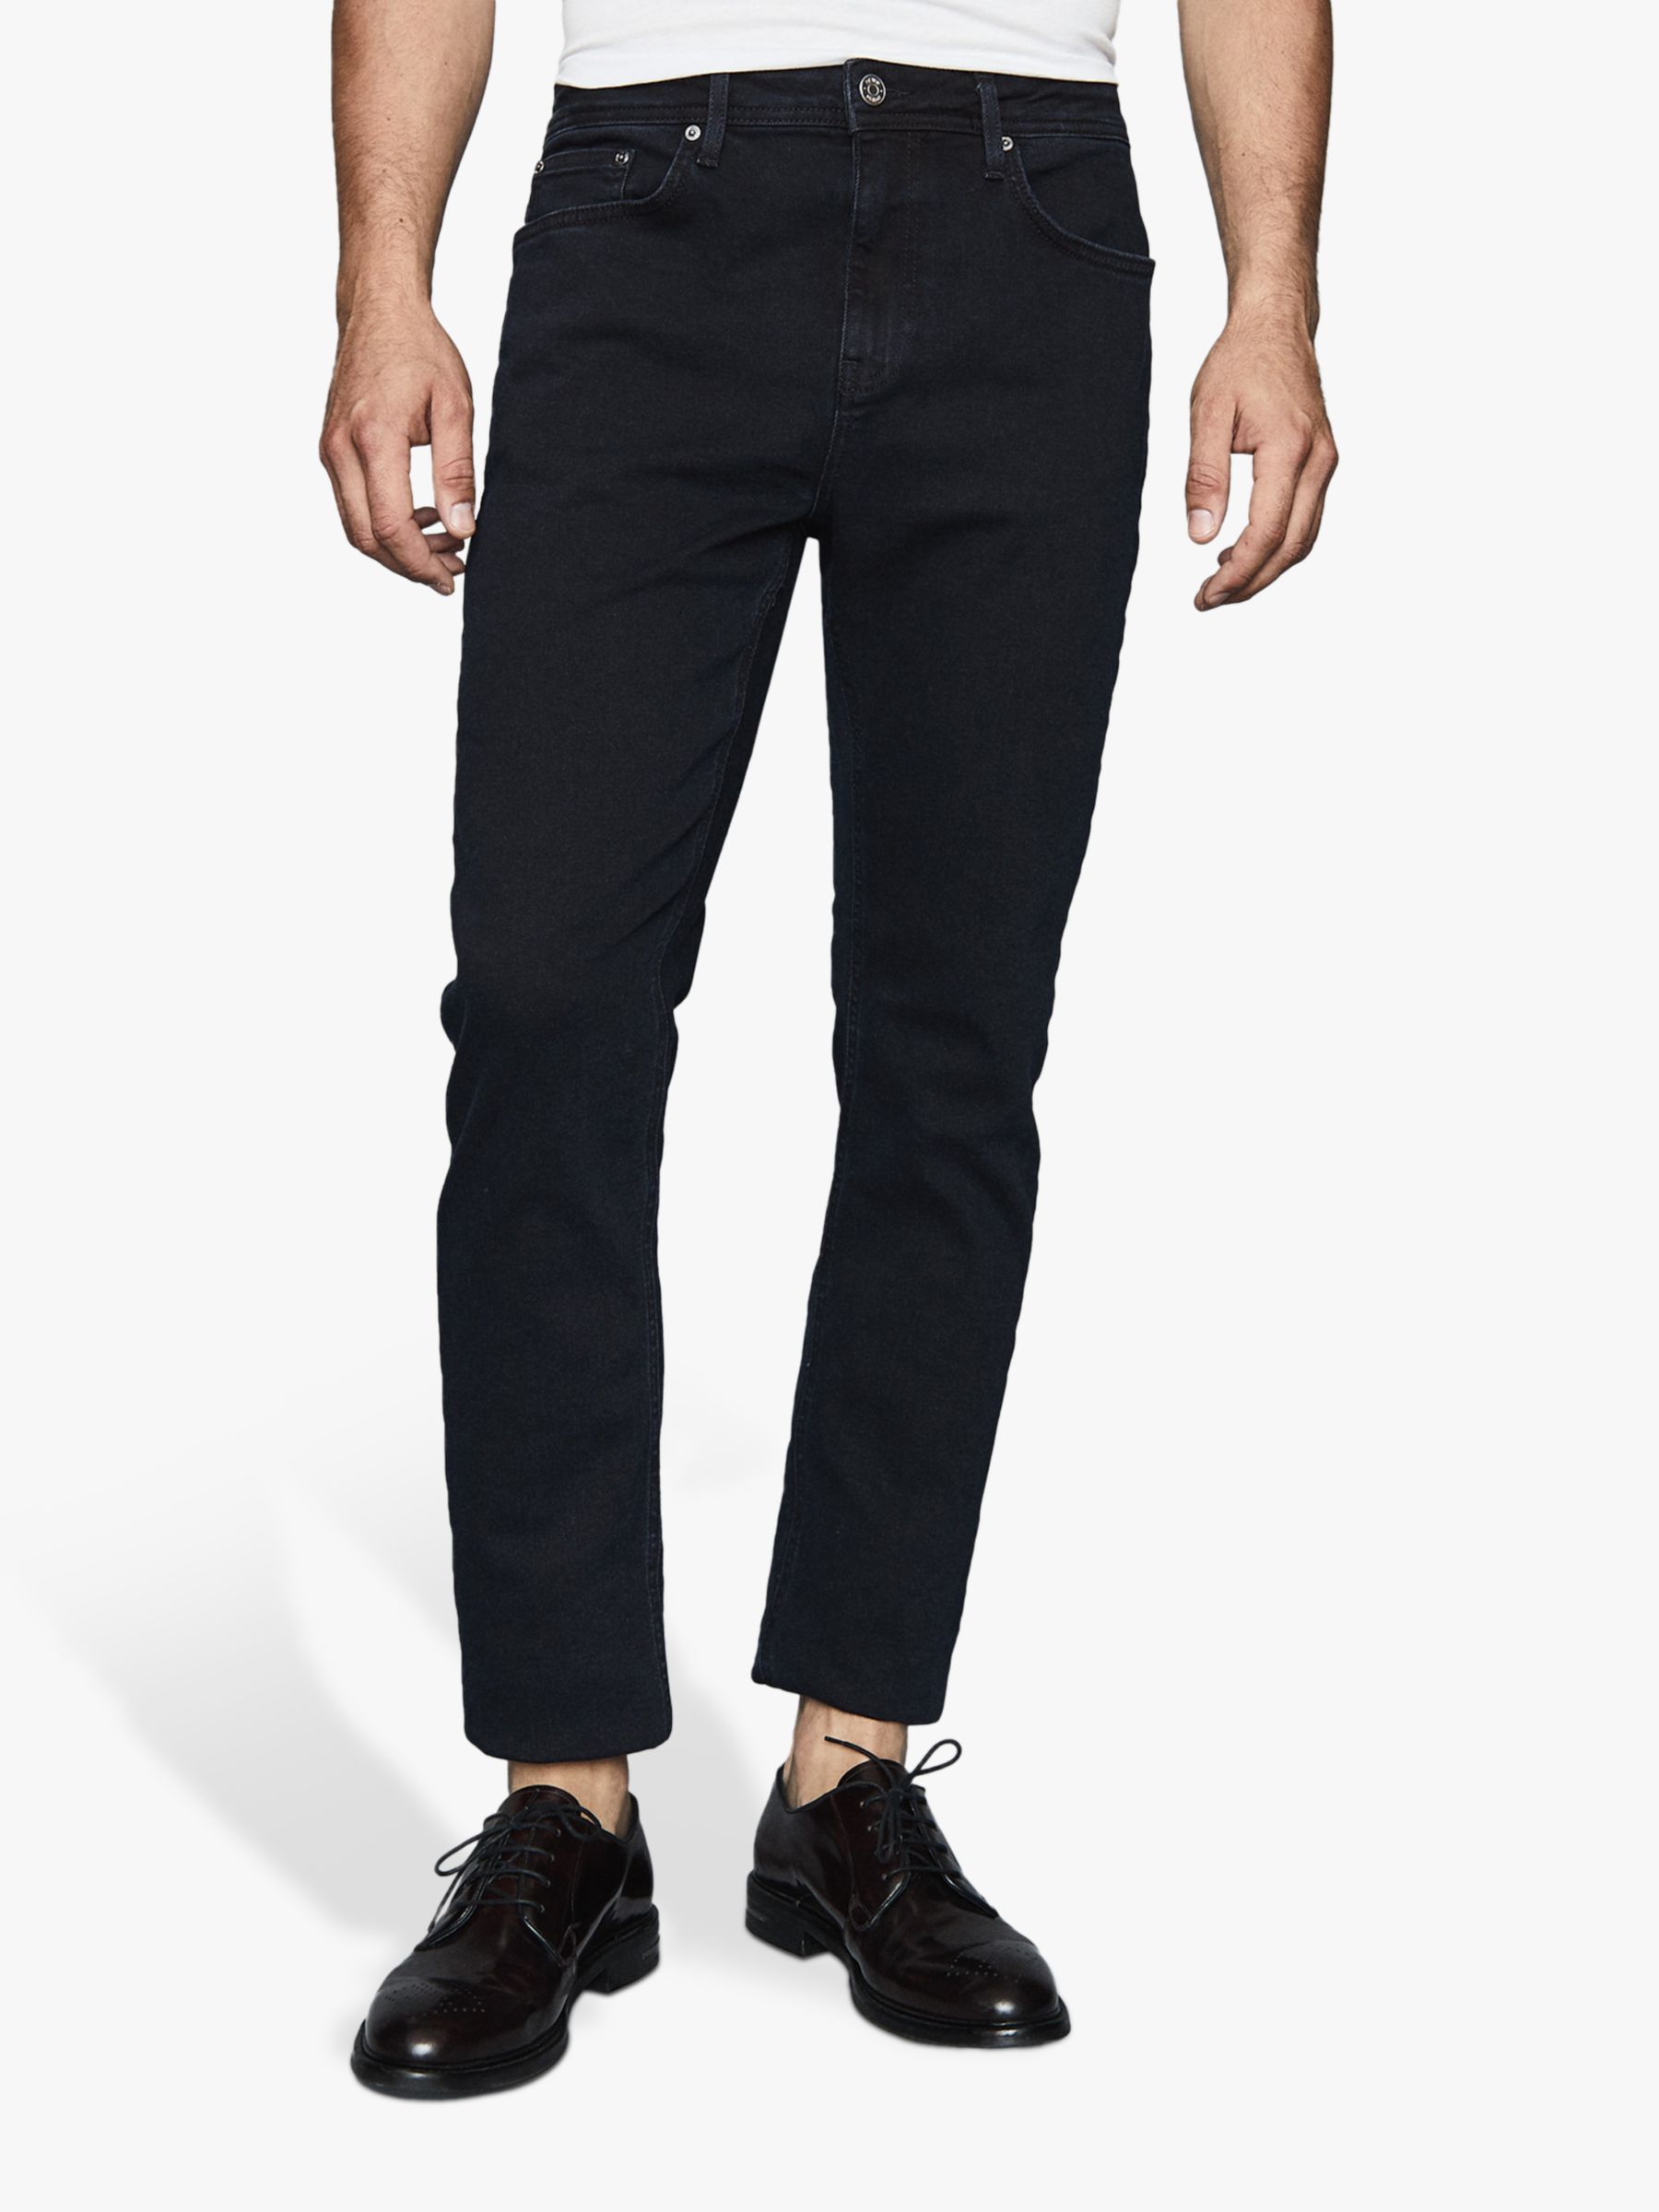 Reiss Bruce Slim Fit Jeans, Navy at John Lewis & Partners